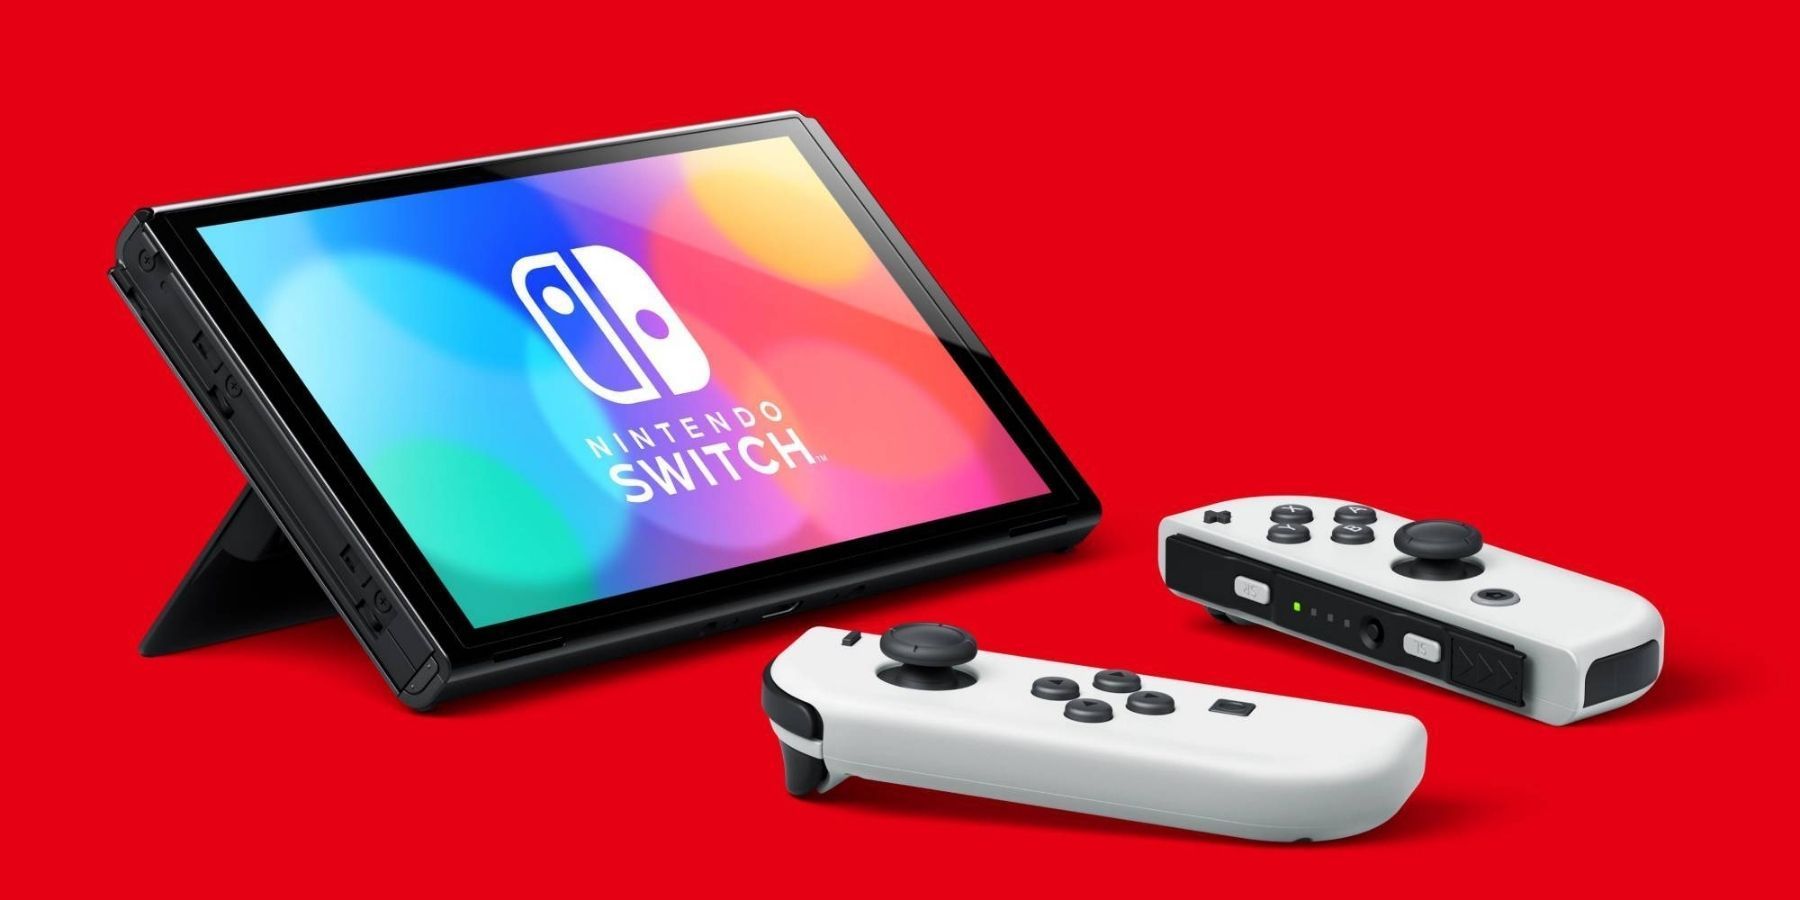 Nintendo Switch Cloud Gaming